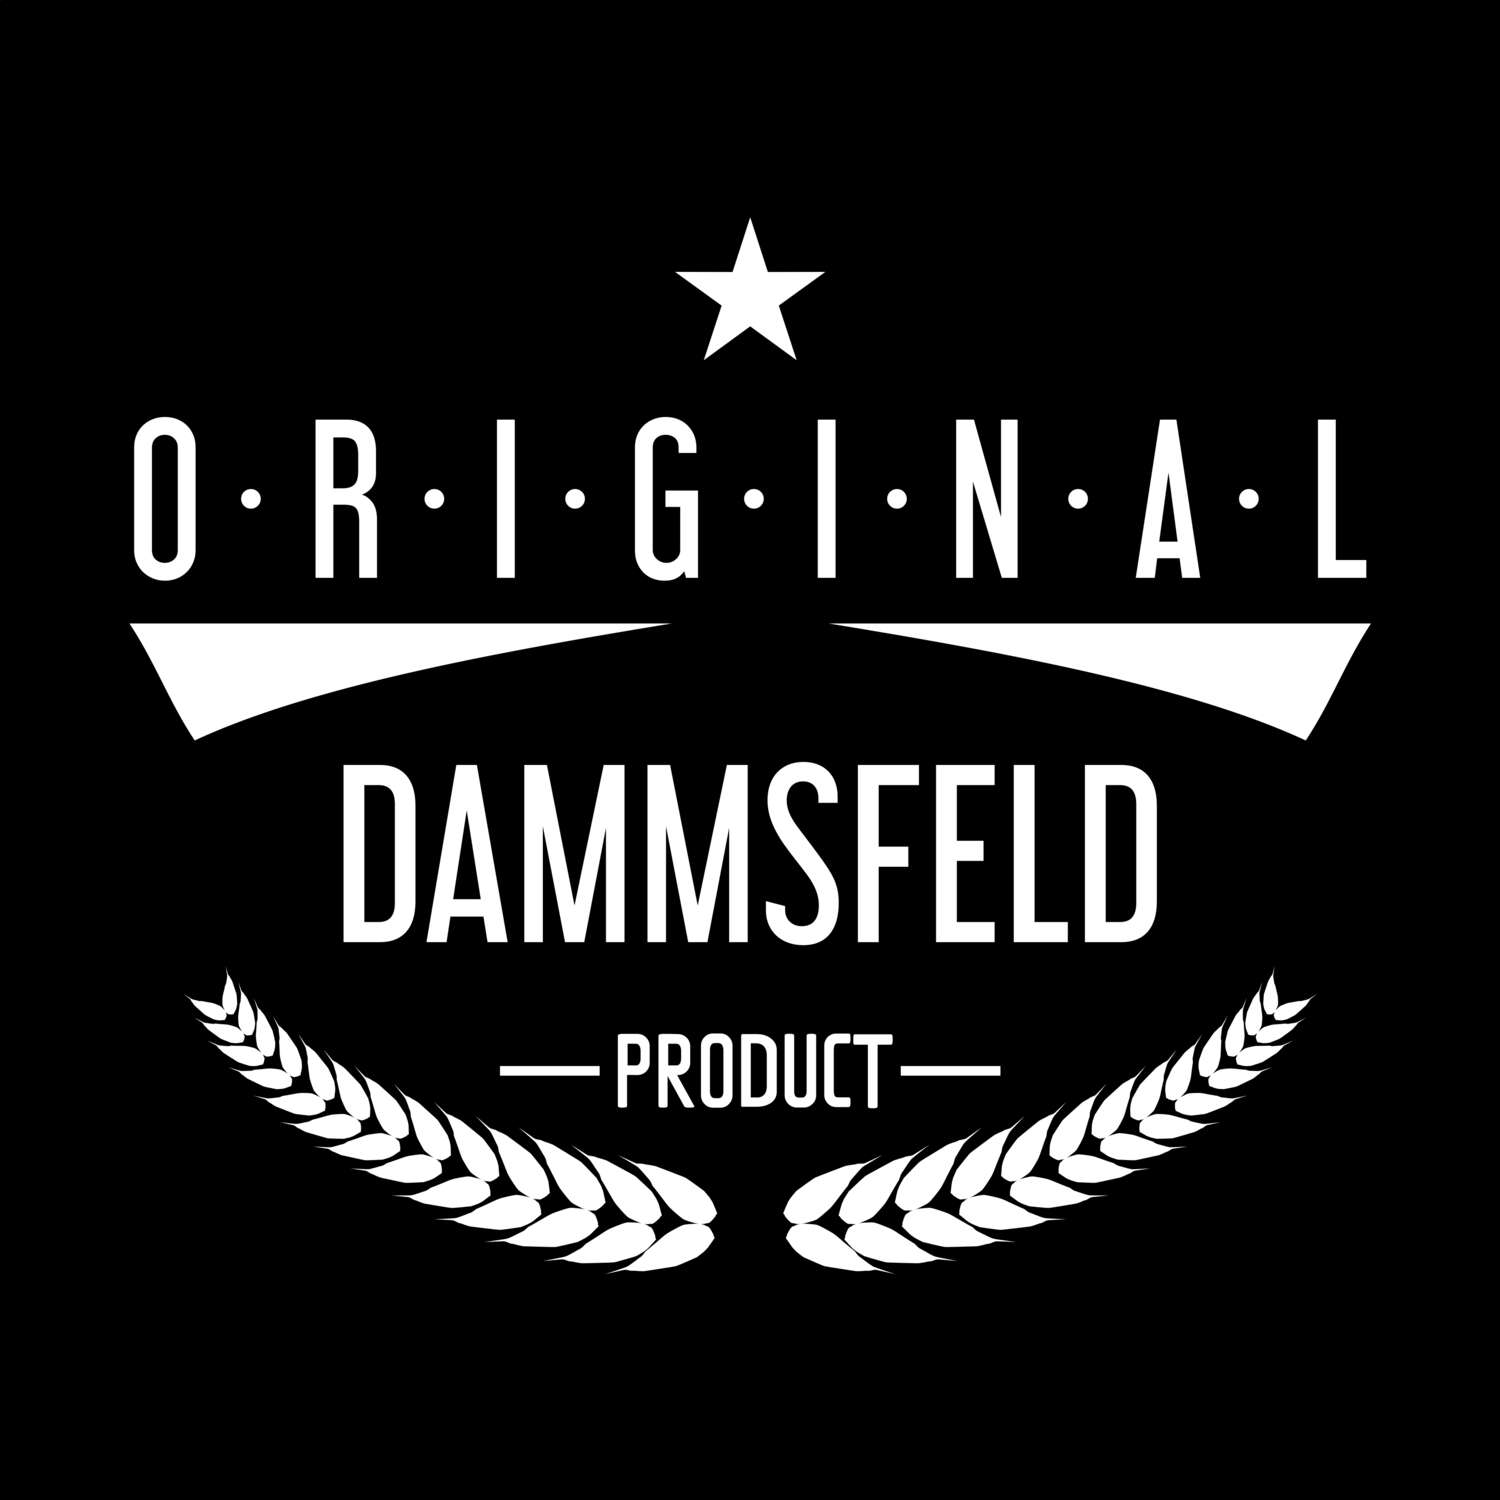 Dammsfeld T-Shirt »Original Product«